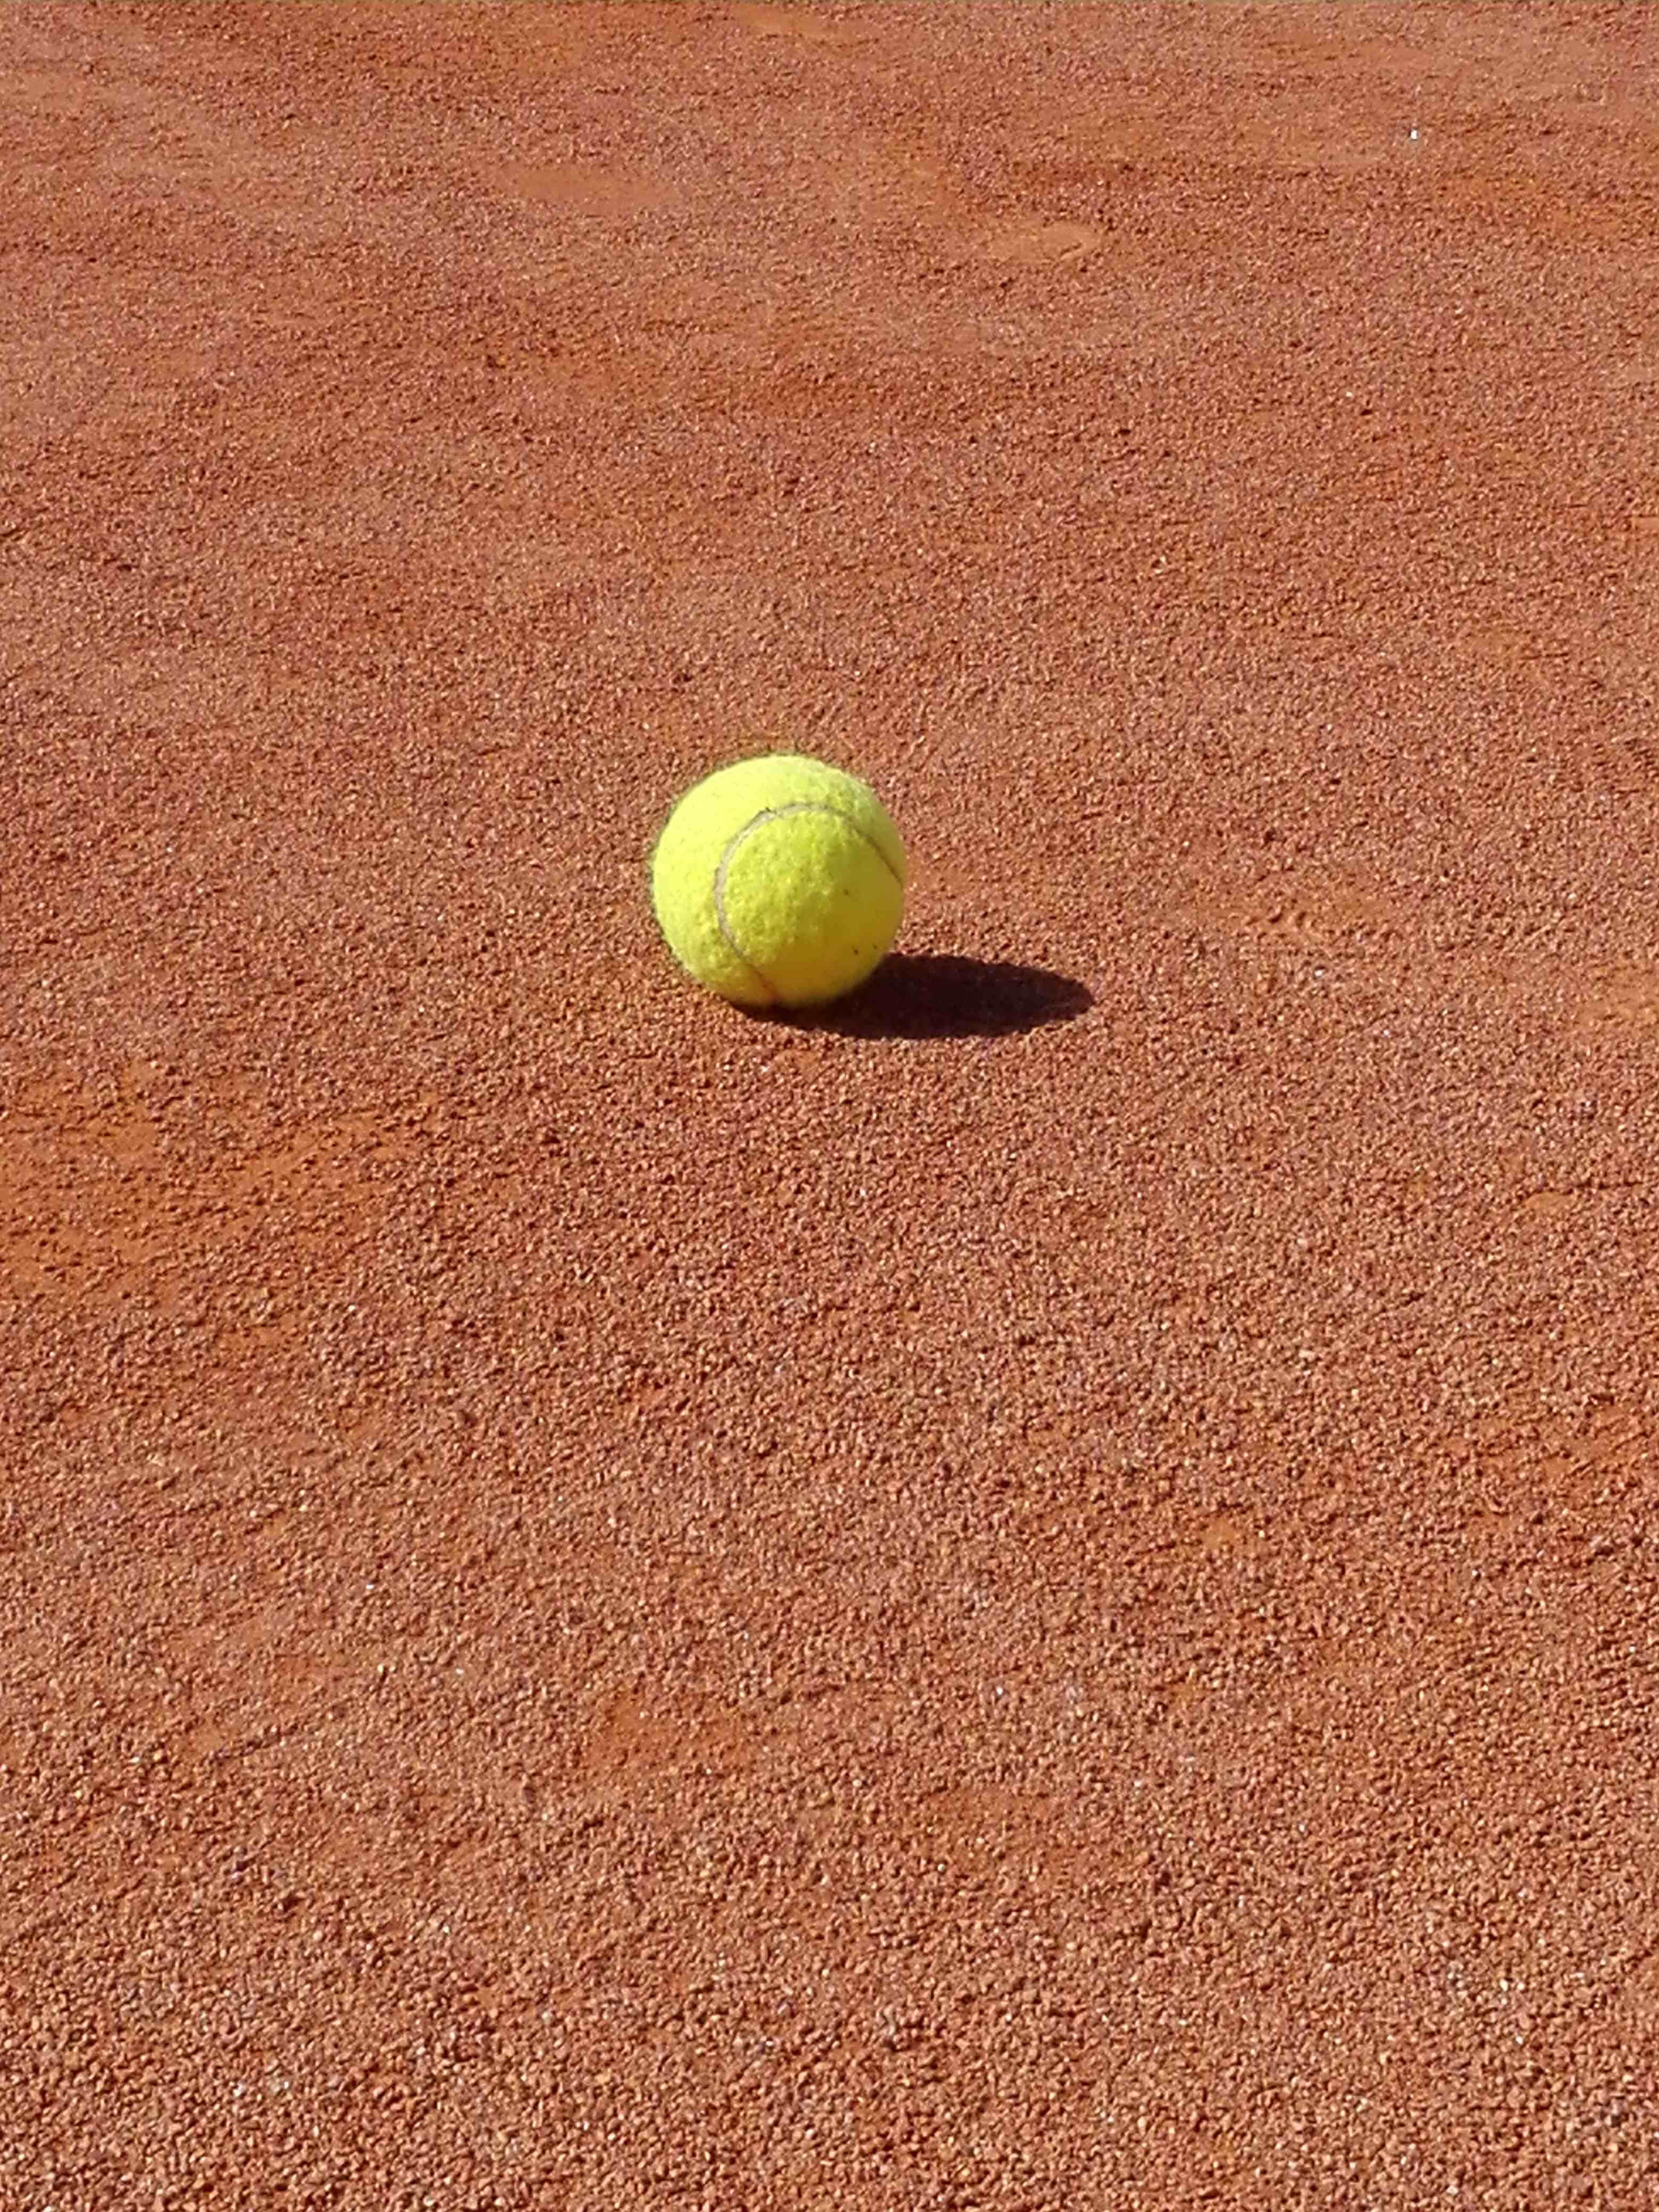 Tennis3